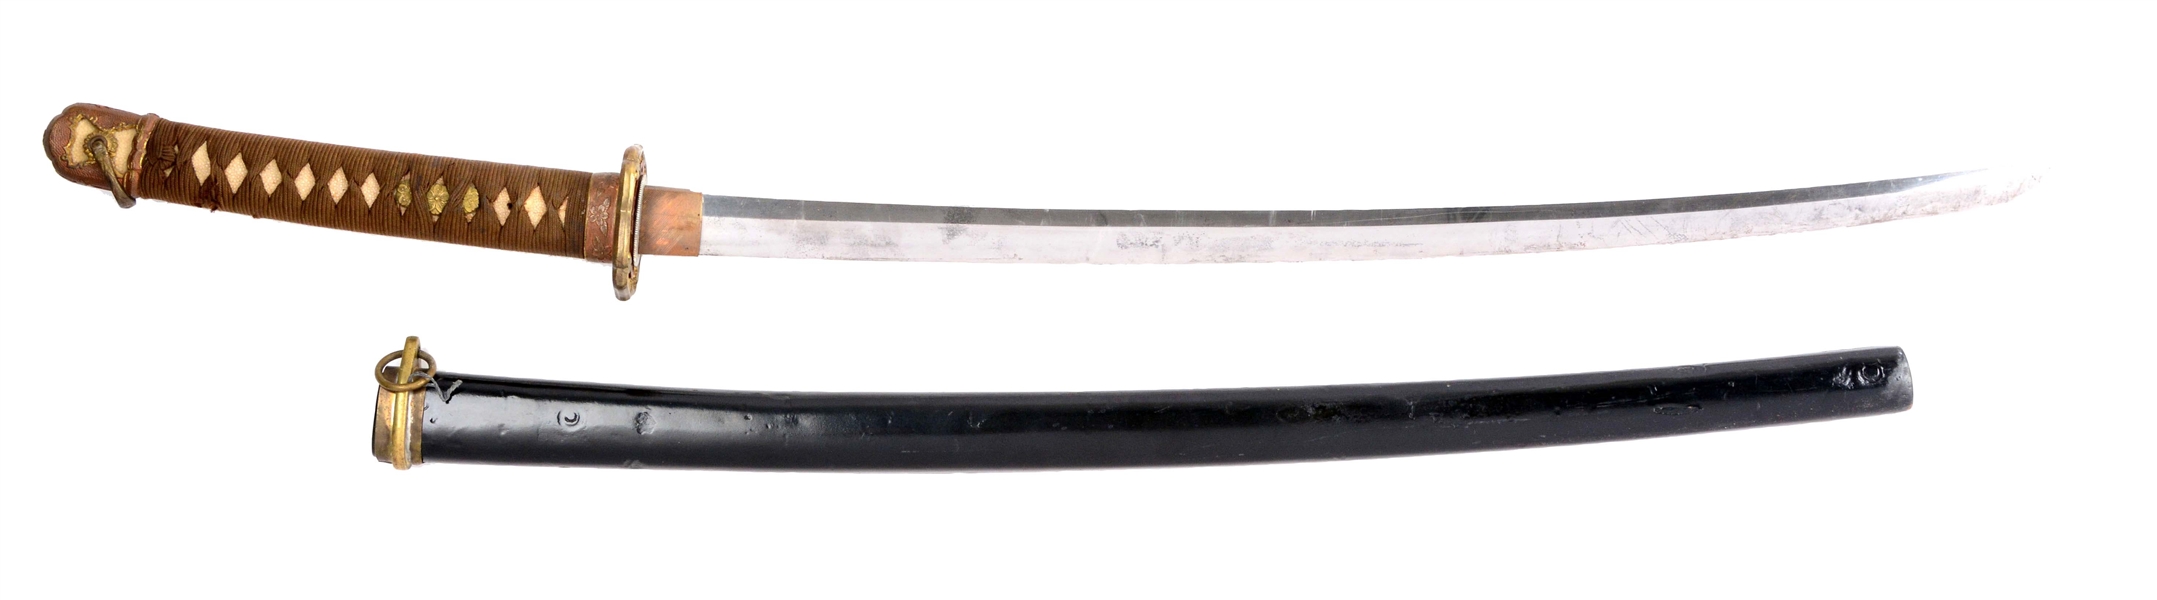 WWII JAPANESE SAMURAI SWORD WITH 25" BLADE.